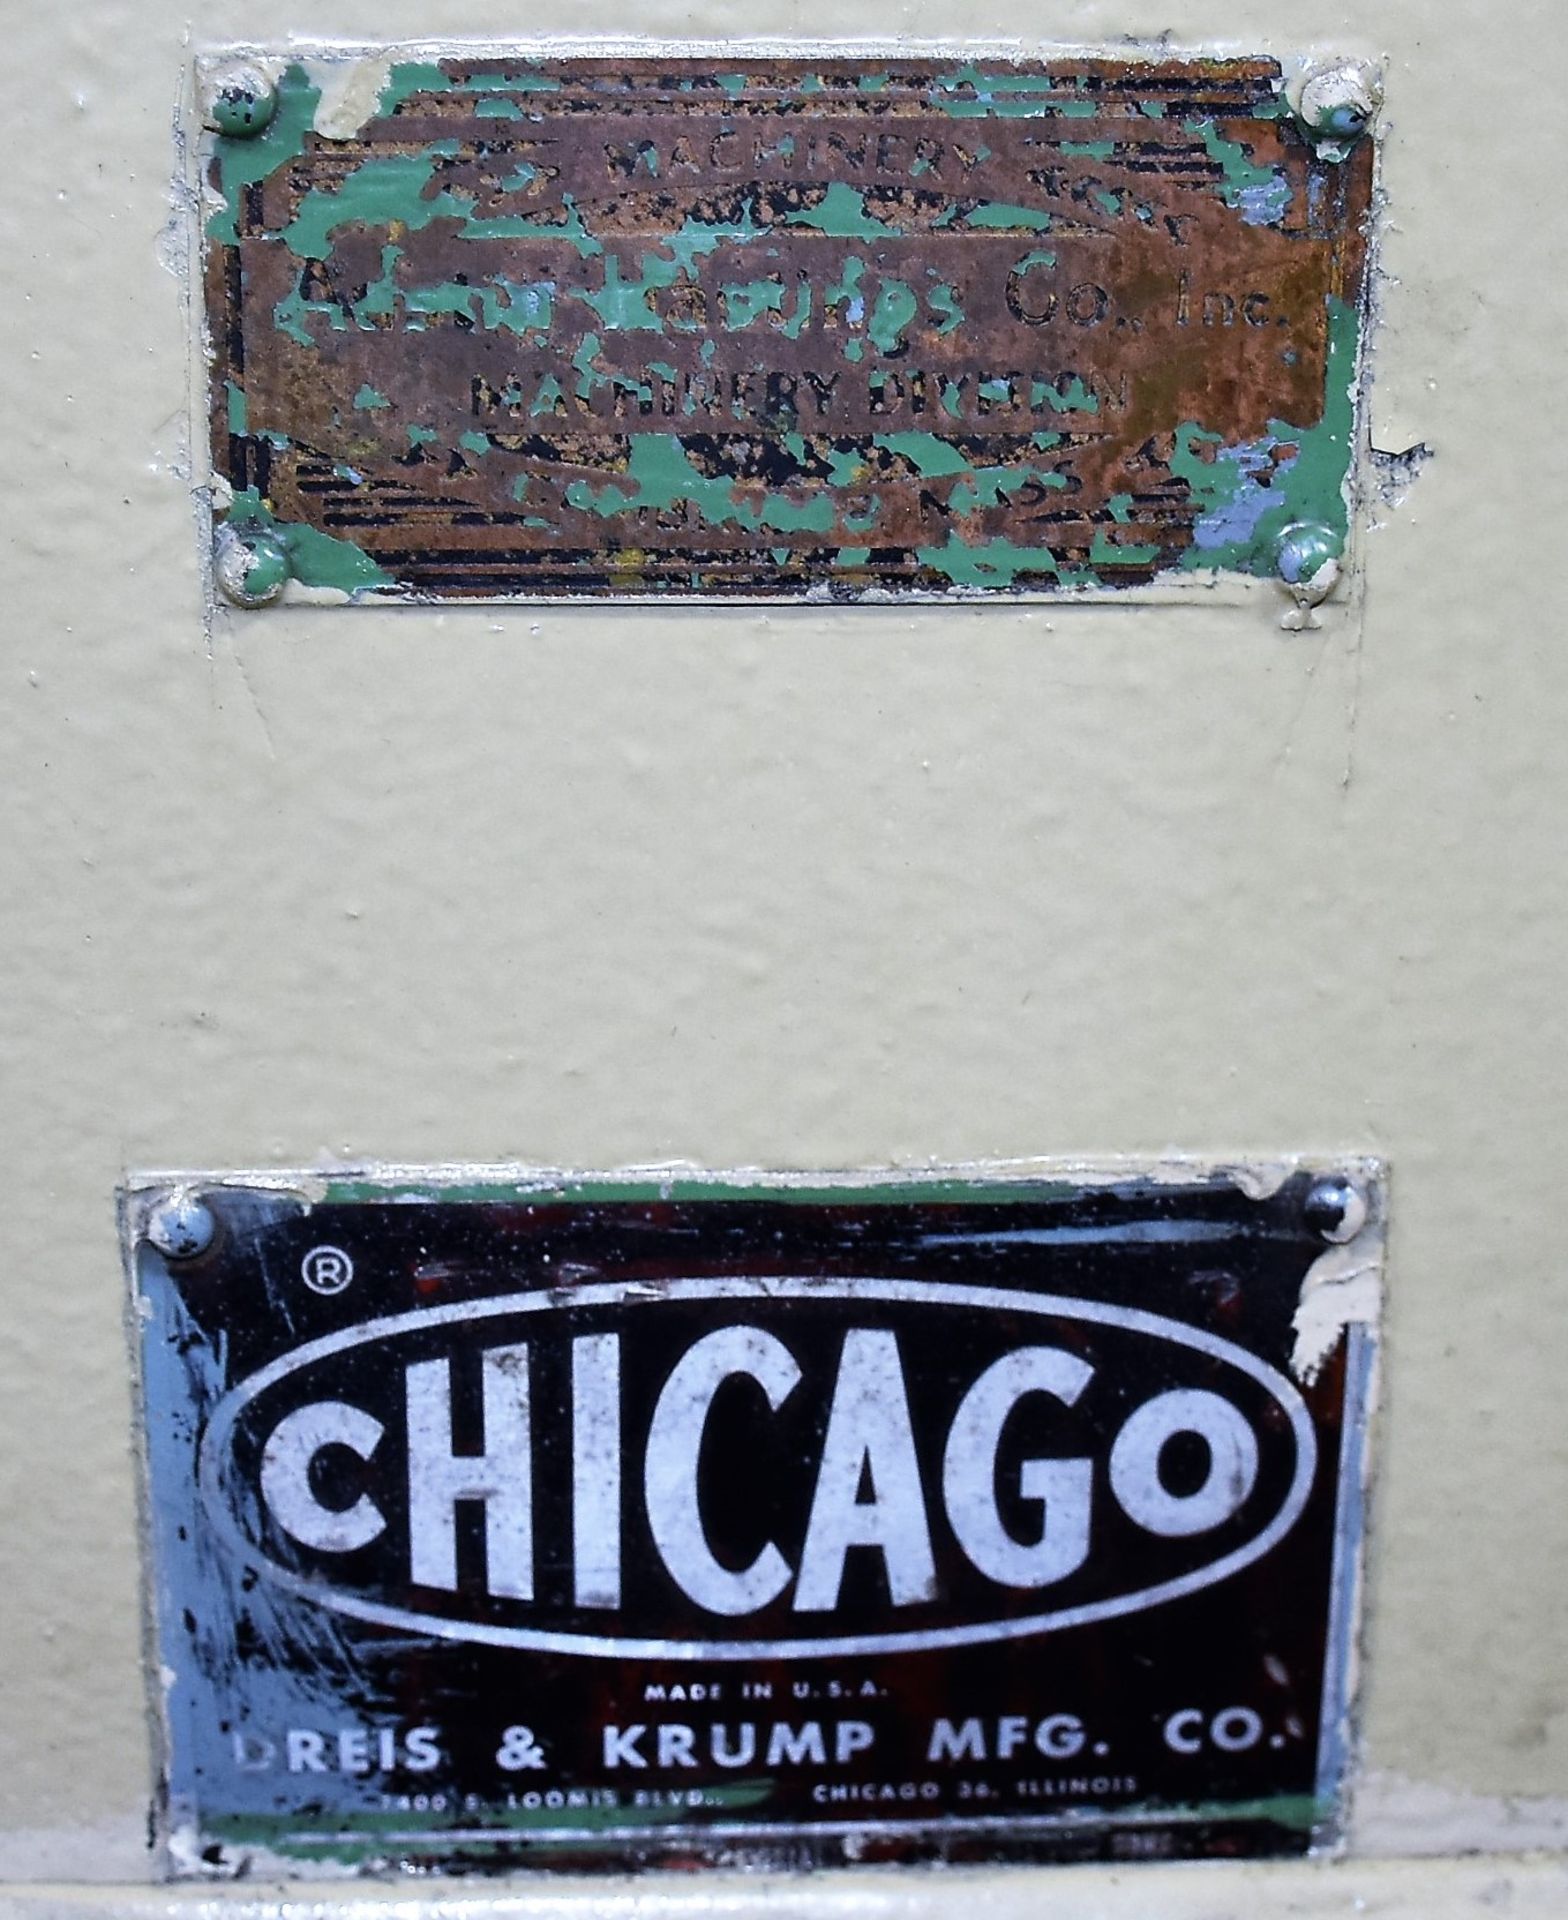 Chicago Dreis & Krump 45 Ton Press Brake - Image 3 of 3